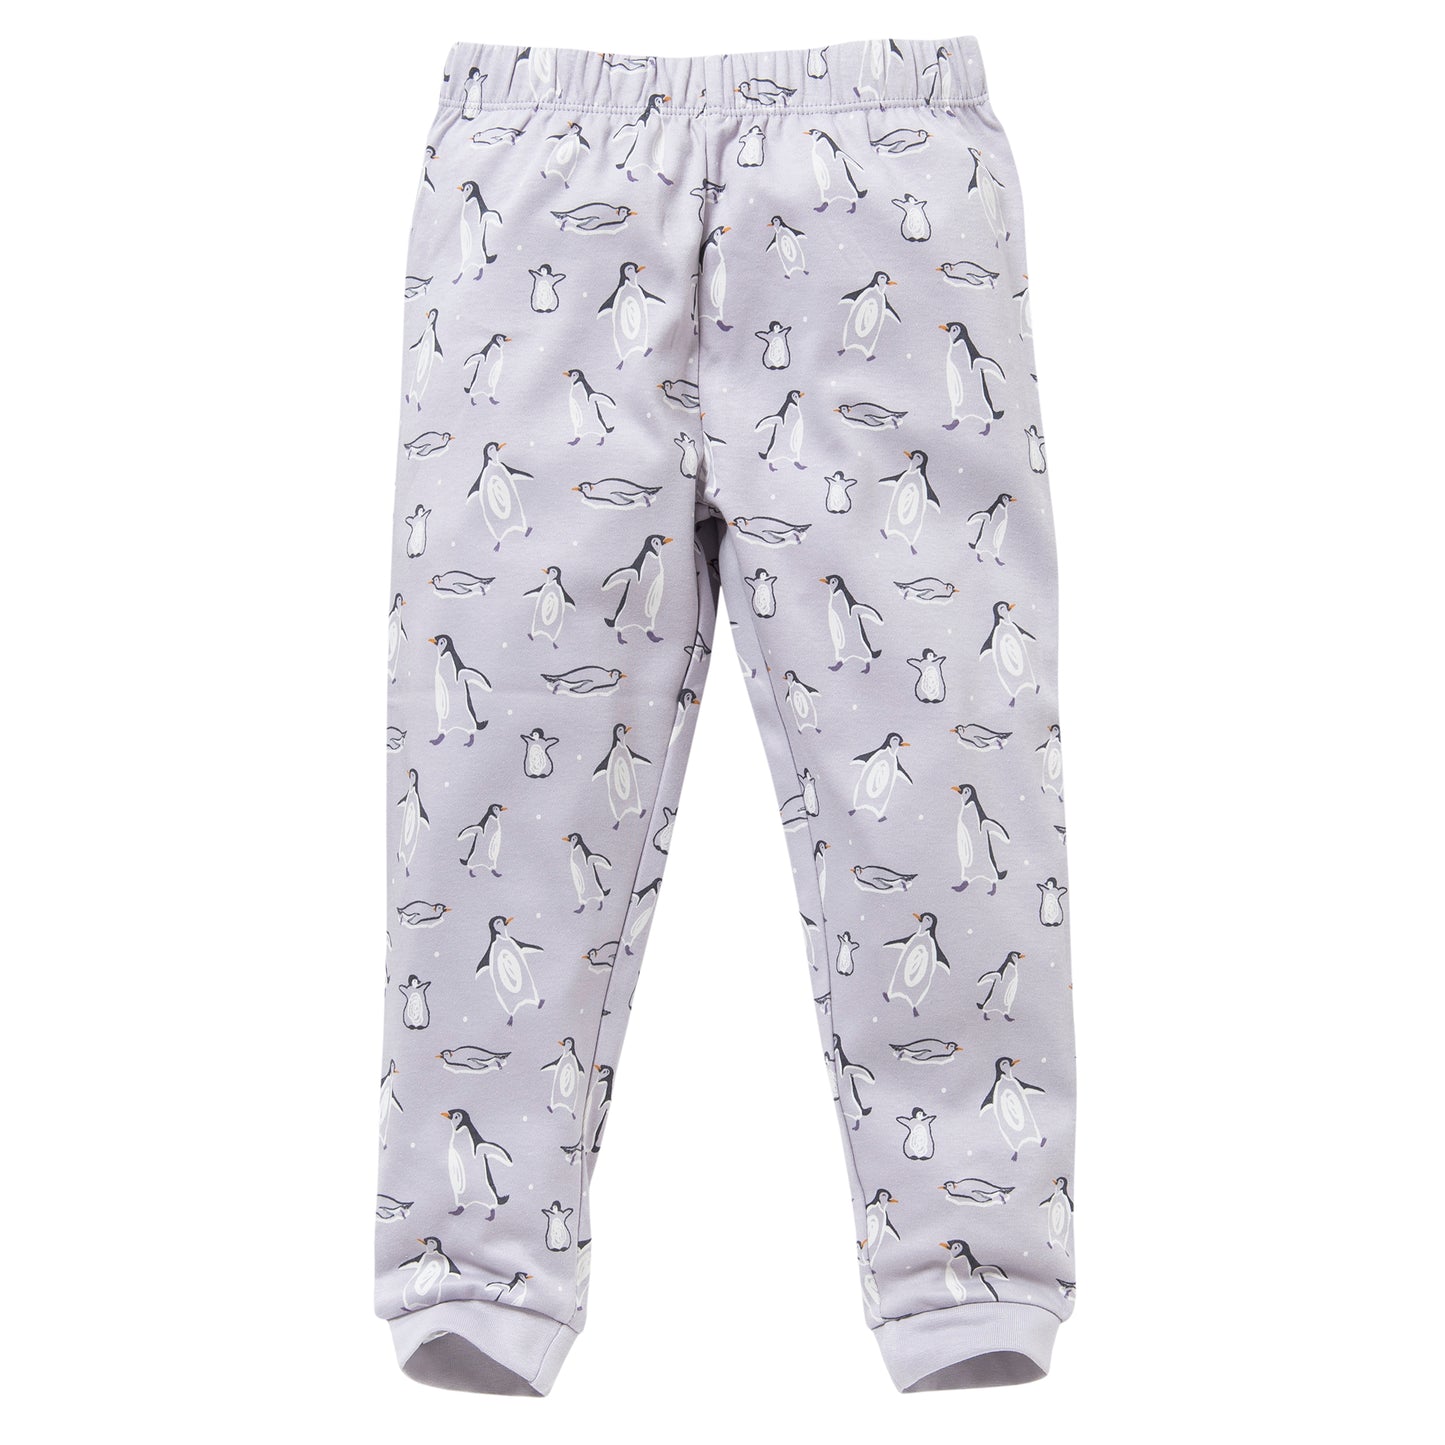 Kinder Pyjama Pinguine Lavendel